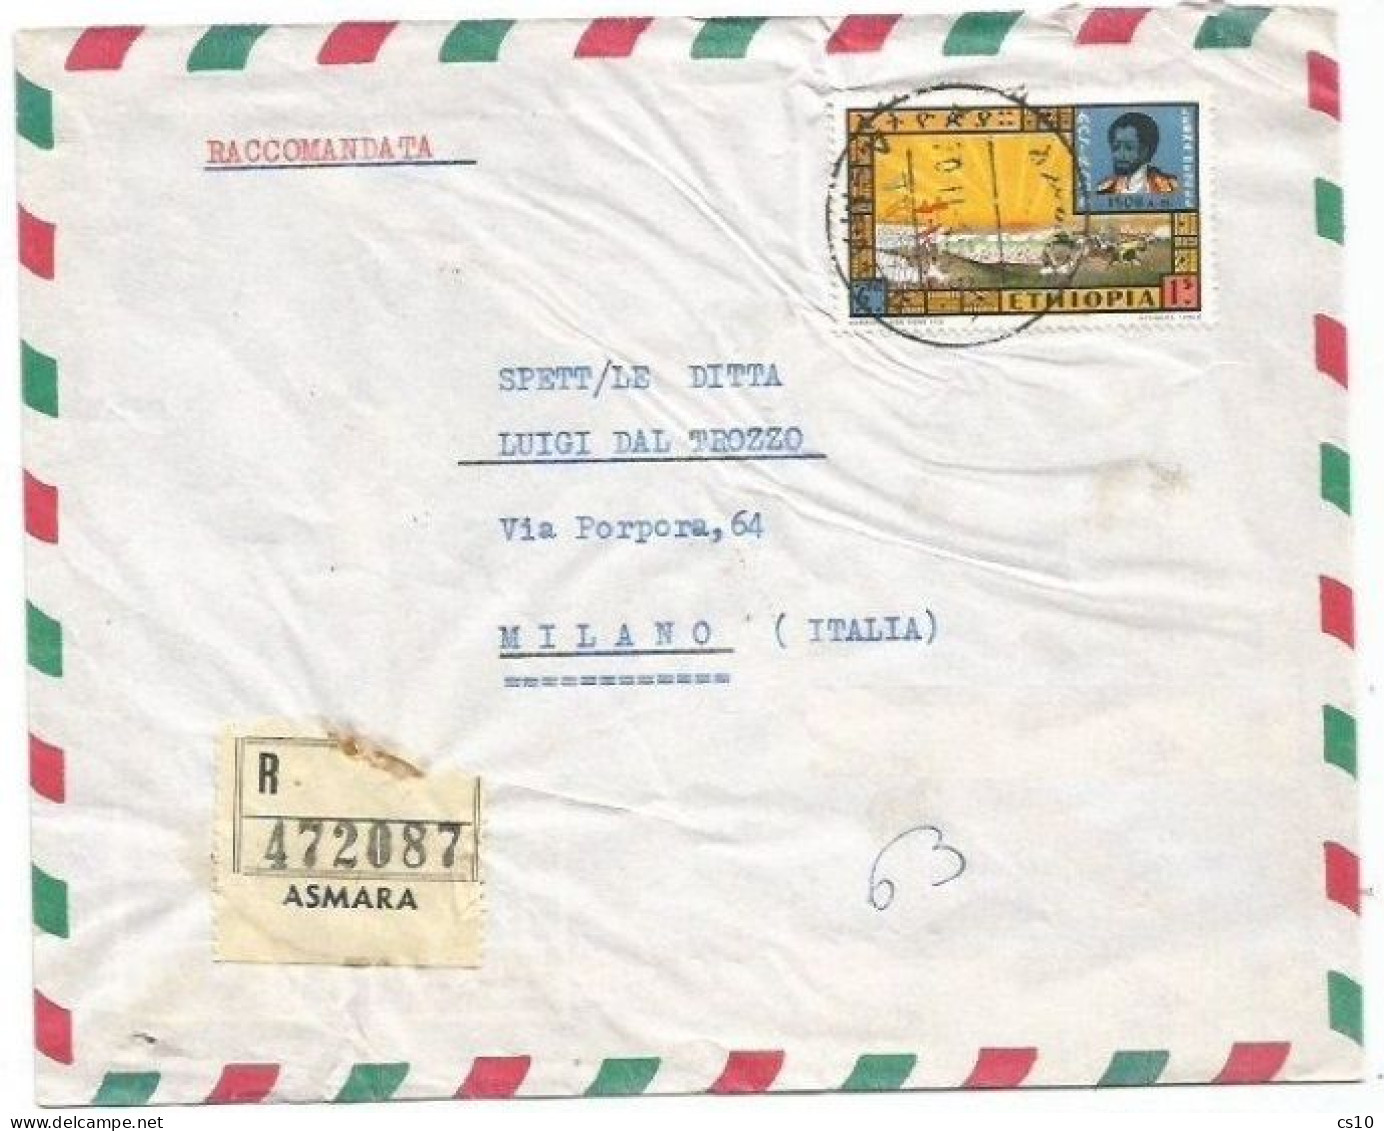 Ethiopia Airmail Registered Commerce Cover Asmara 30nov1966 To Italy With Lebna Dengel  E$ 1 Solo Franking - Etiopía